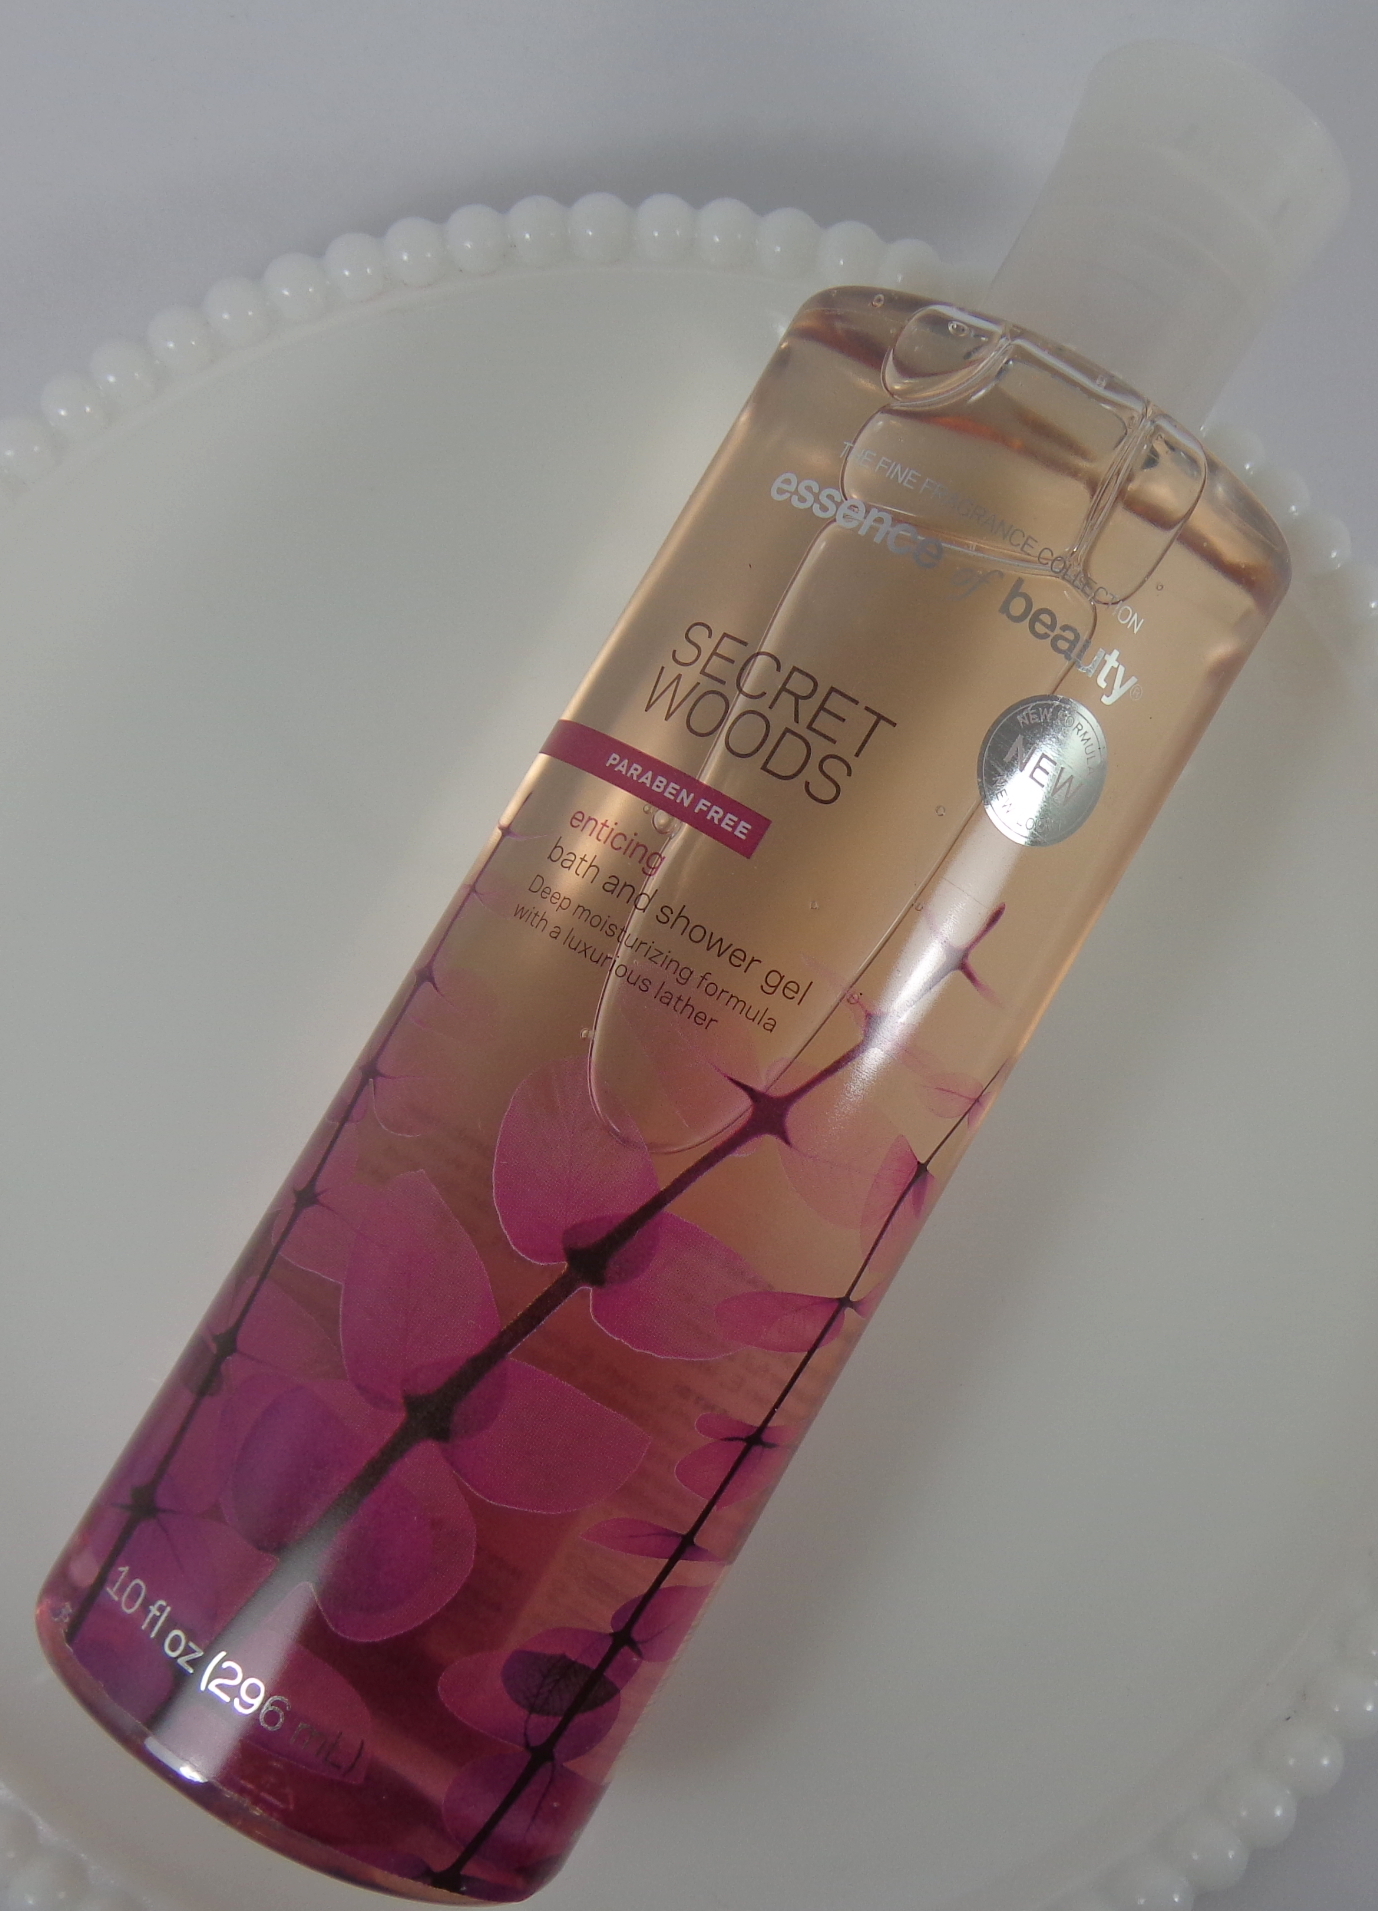 Review Essence Of Beauty Shower Gel Body Lotion Fragrance Mist My Highest Self